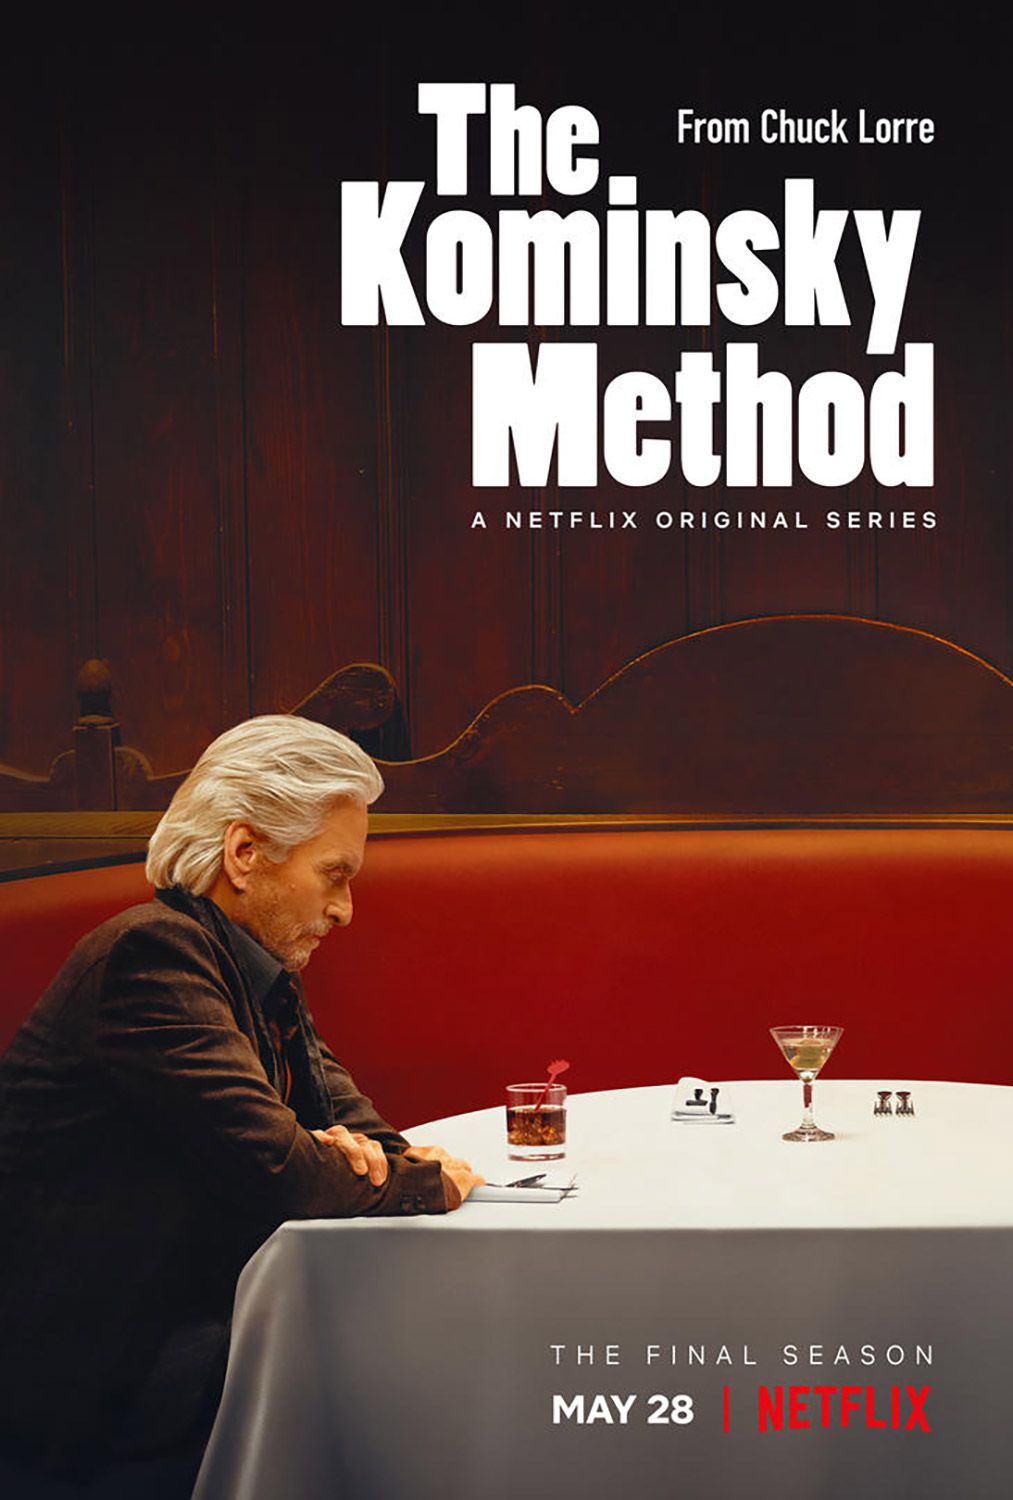 the kominsky method